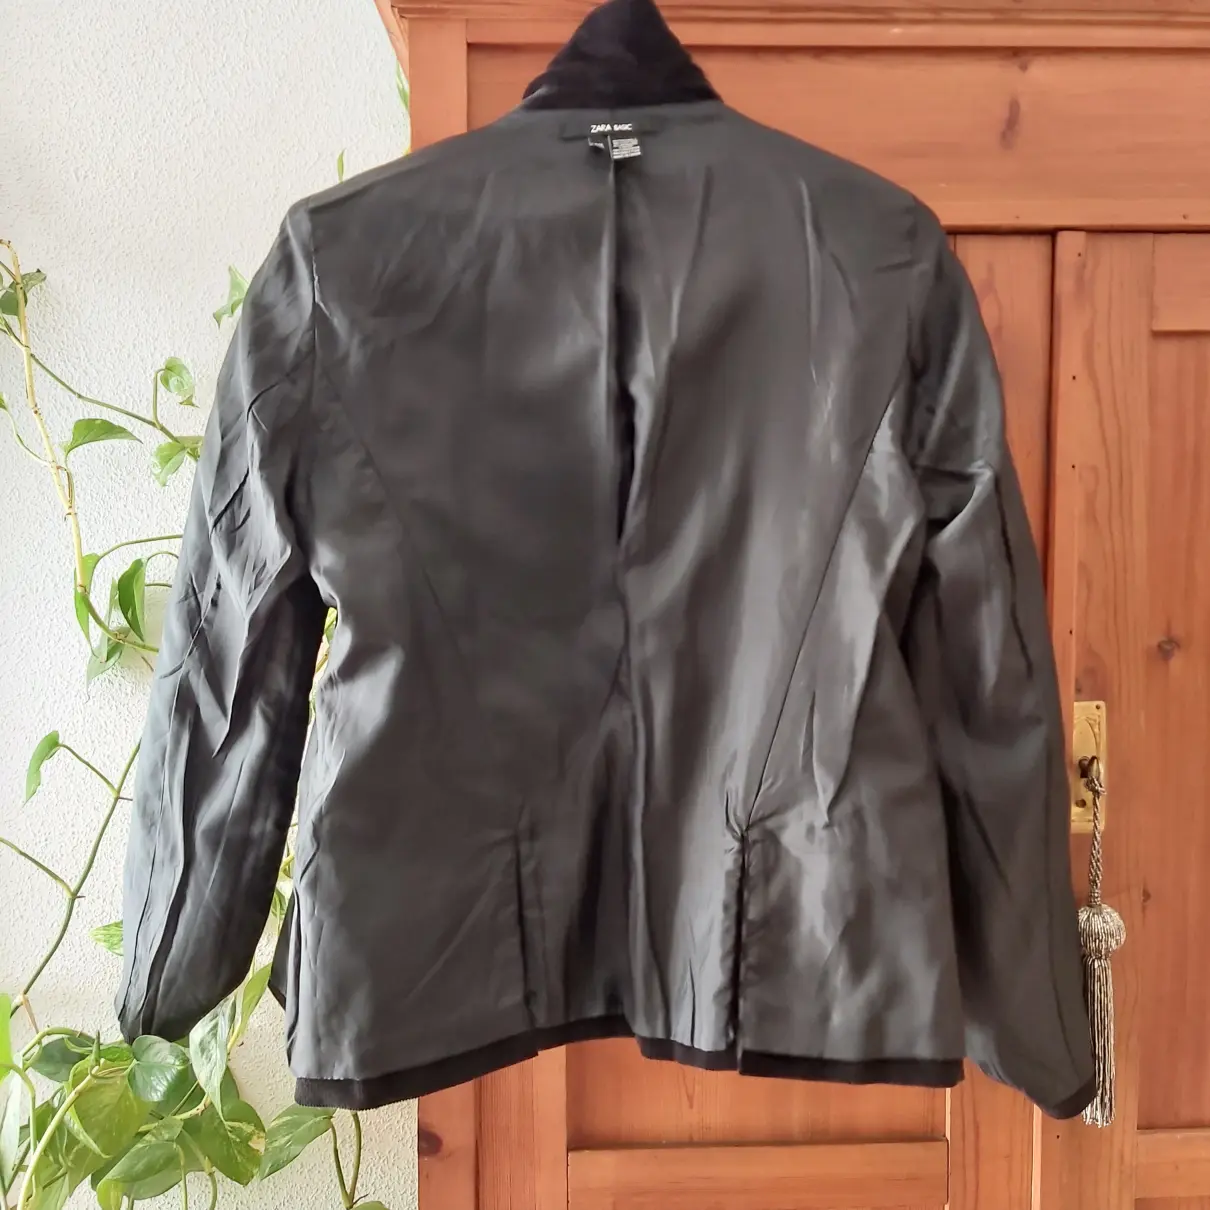 Buy Zara Black Cotton Jacket online